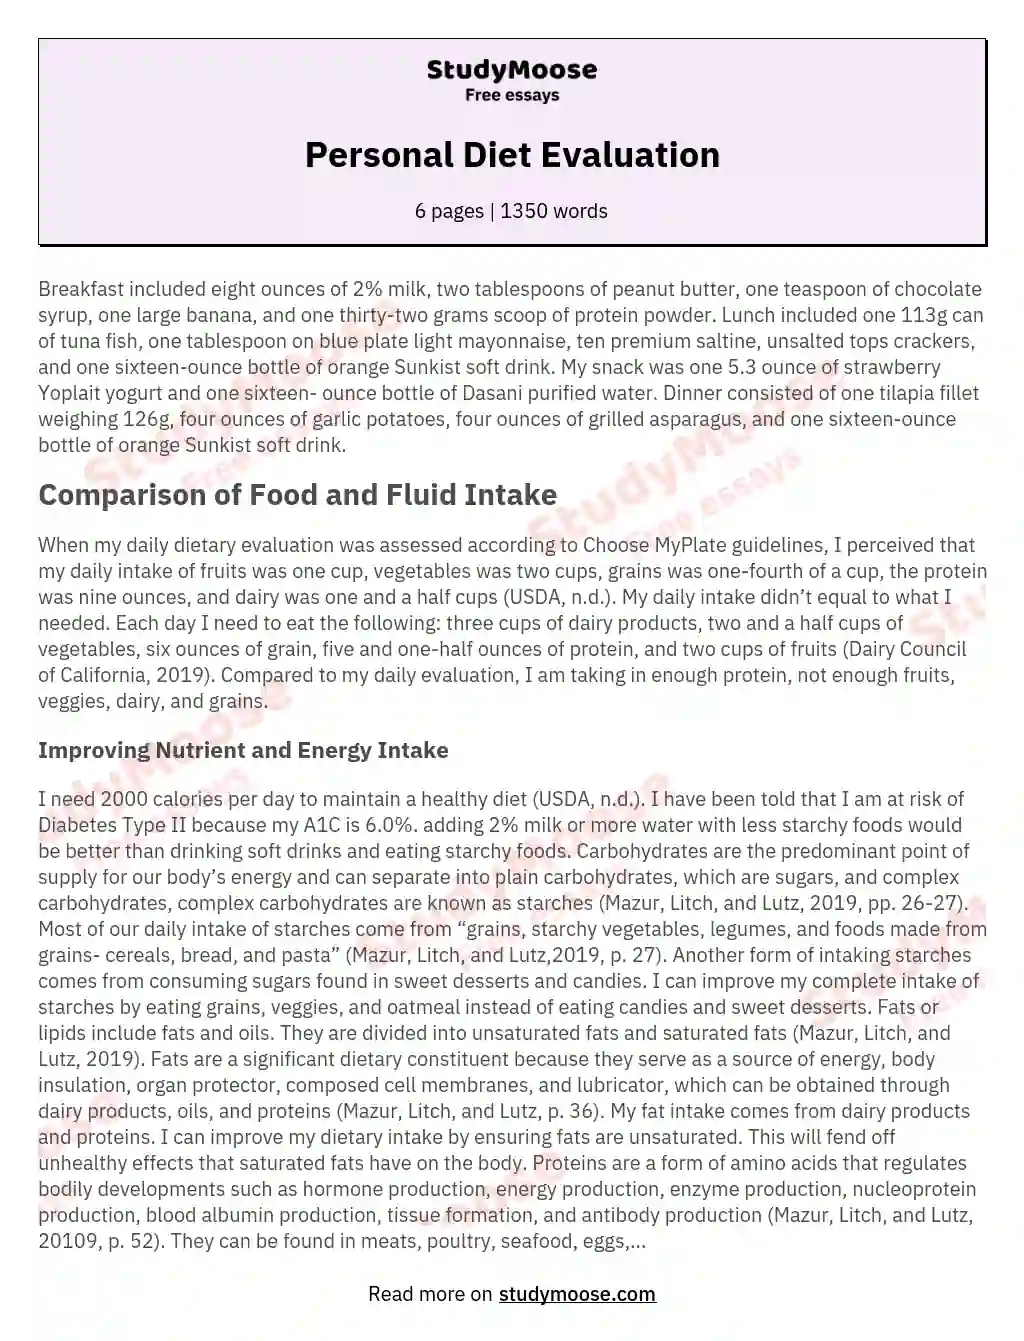 Personal Diet Evaluation essay